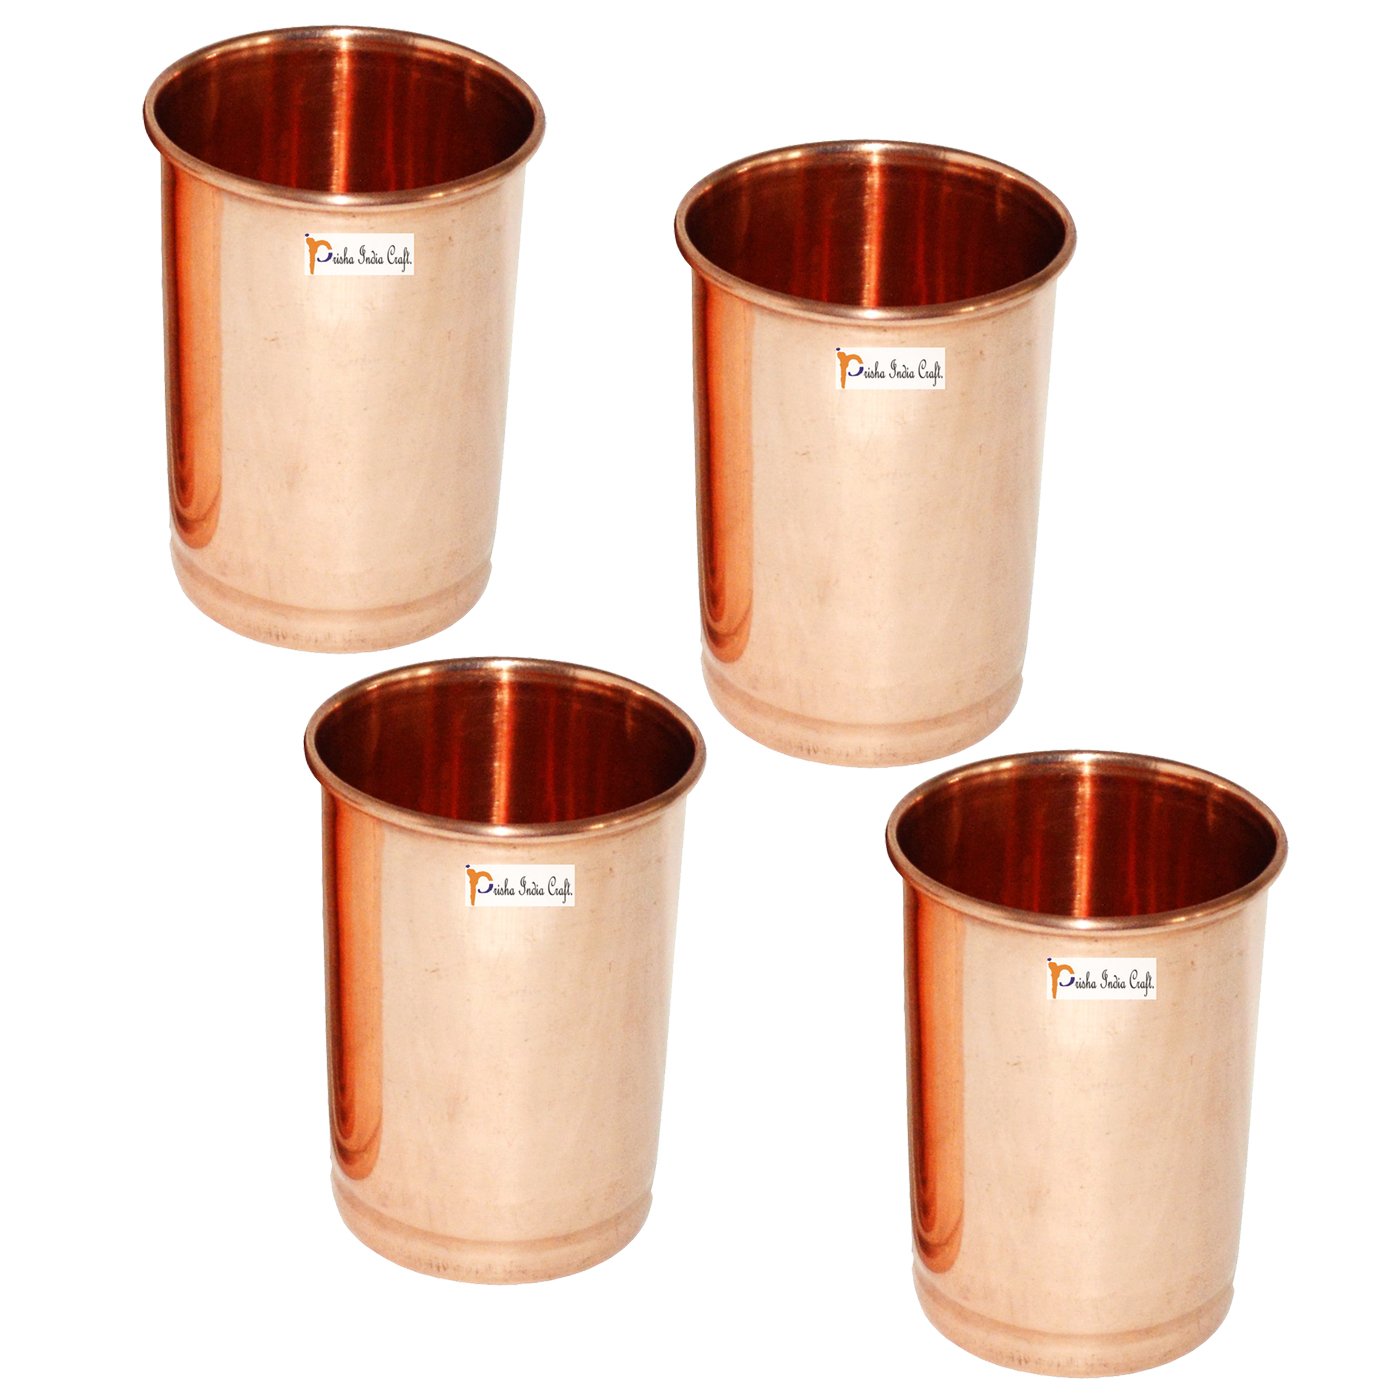 Prisha India Craft Copper Glass Tumbler Set, 300 ML, Set of 4